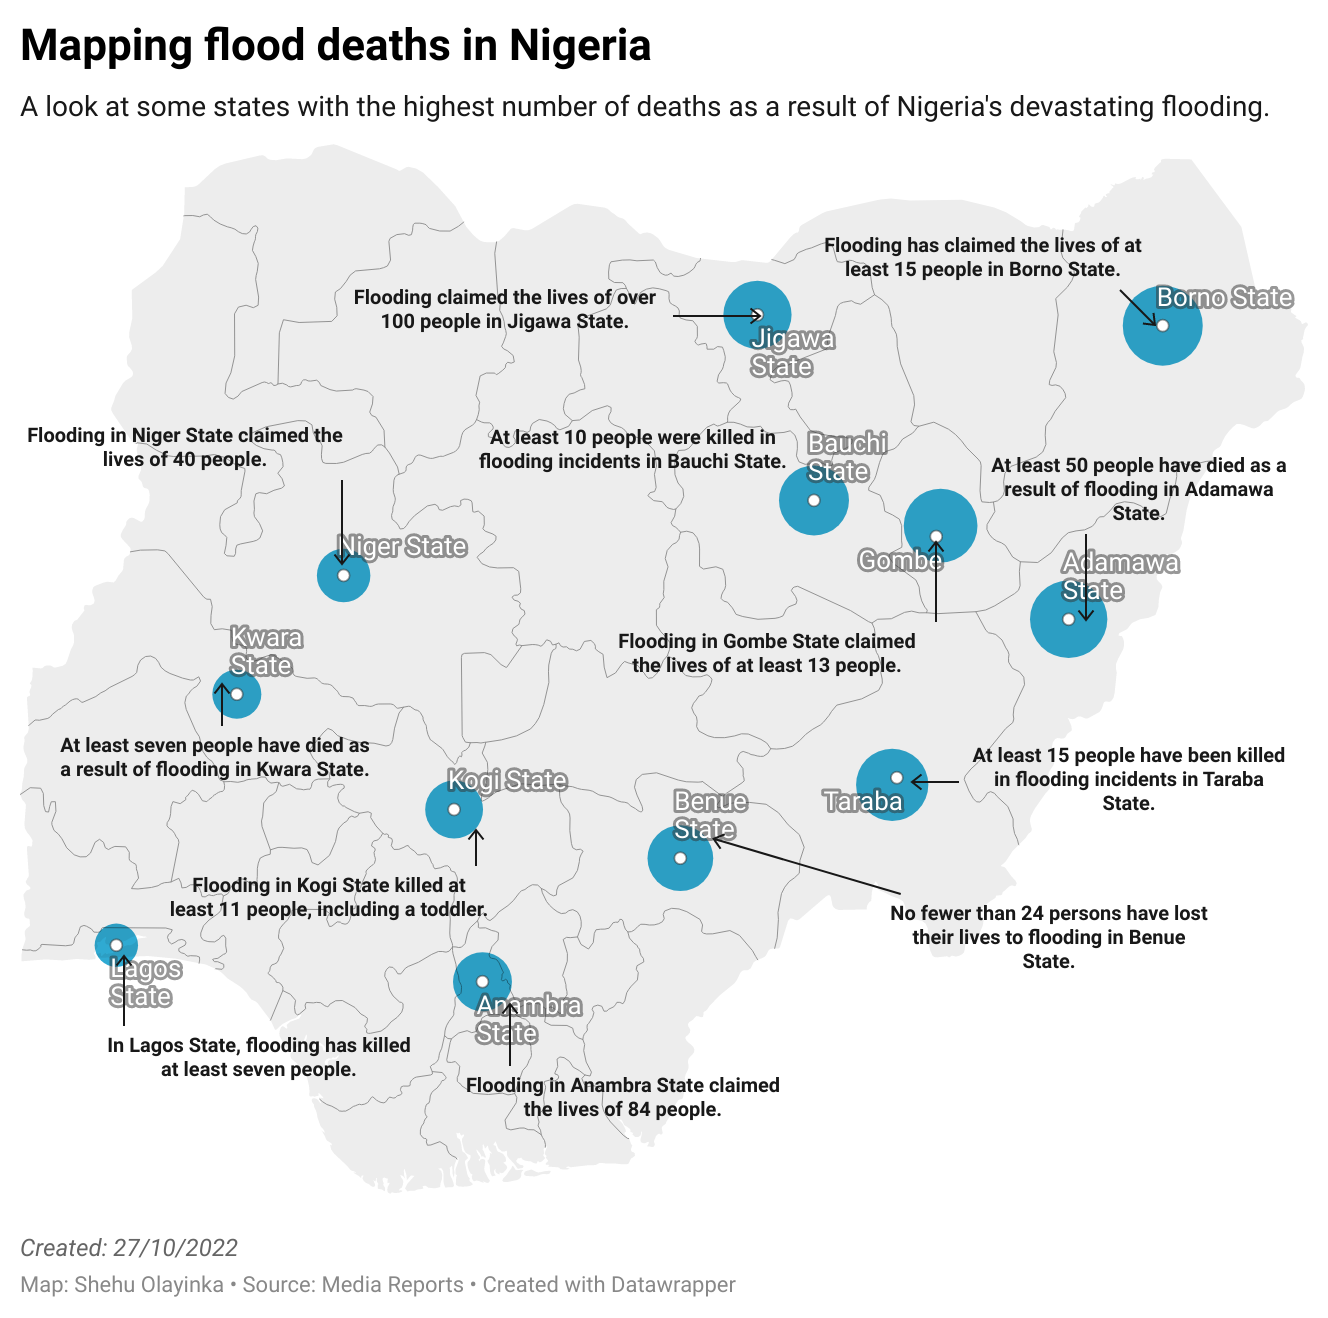 Mapping flood deaths